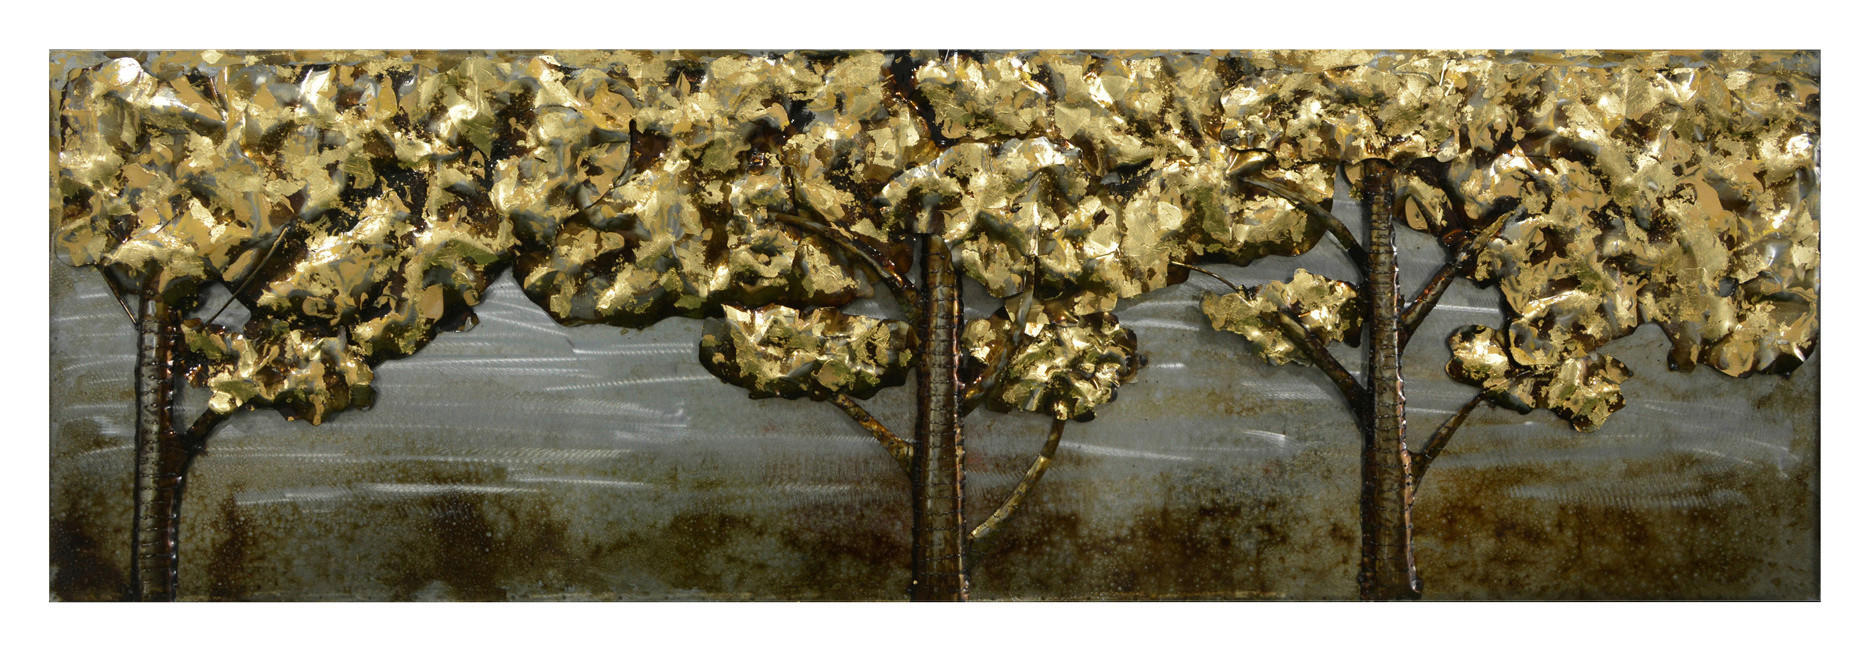 KOVOVÝ OBRAZ, stromy, 180/55 cm  - zlatá, Trend, kov (180/55cm) - Monee